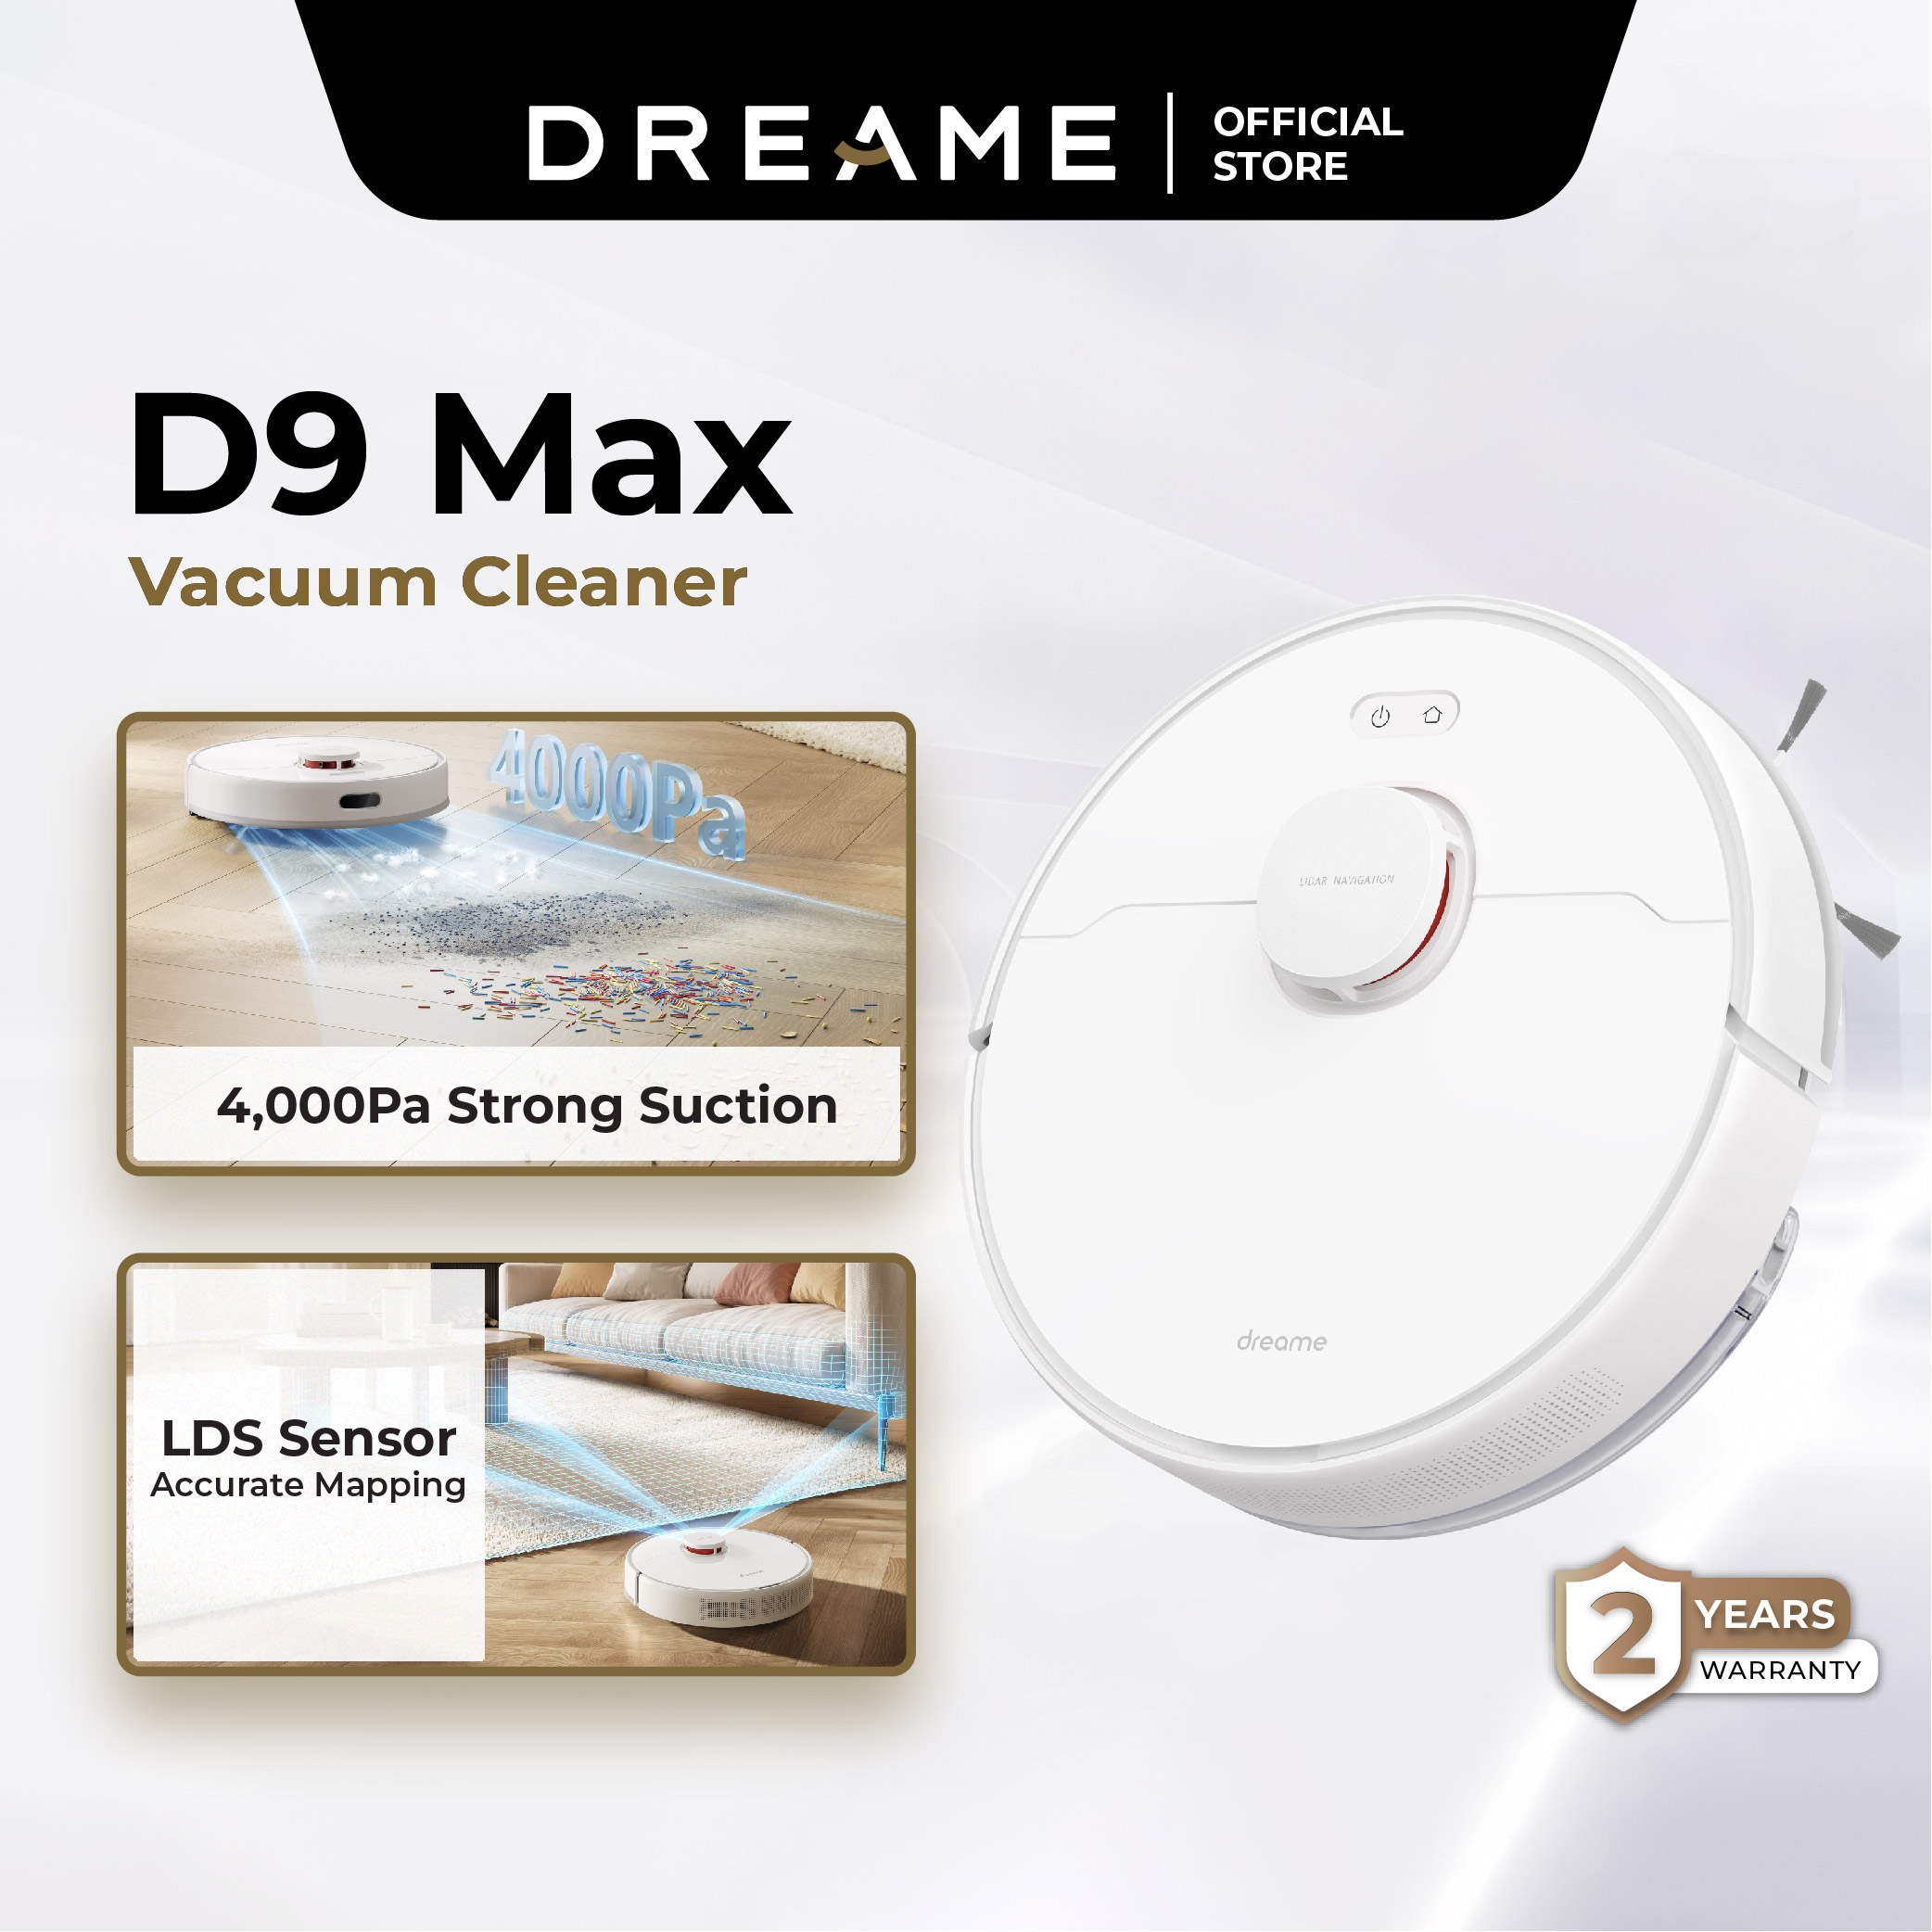 NEW] Dreame D9 Max Robot Vacuum and Mop, LDS Navigation